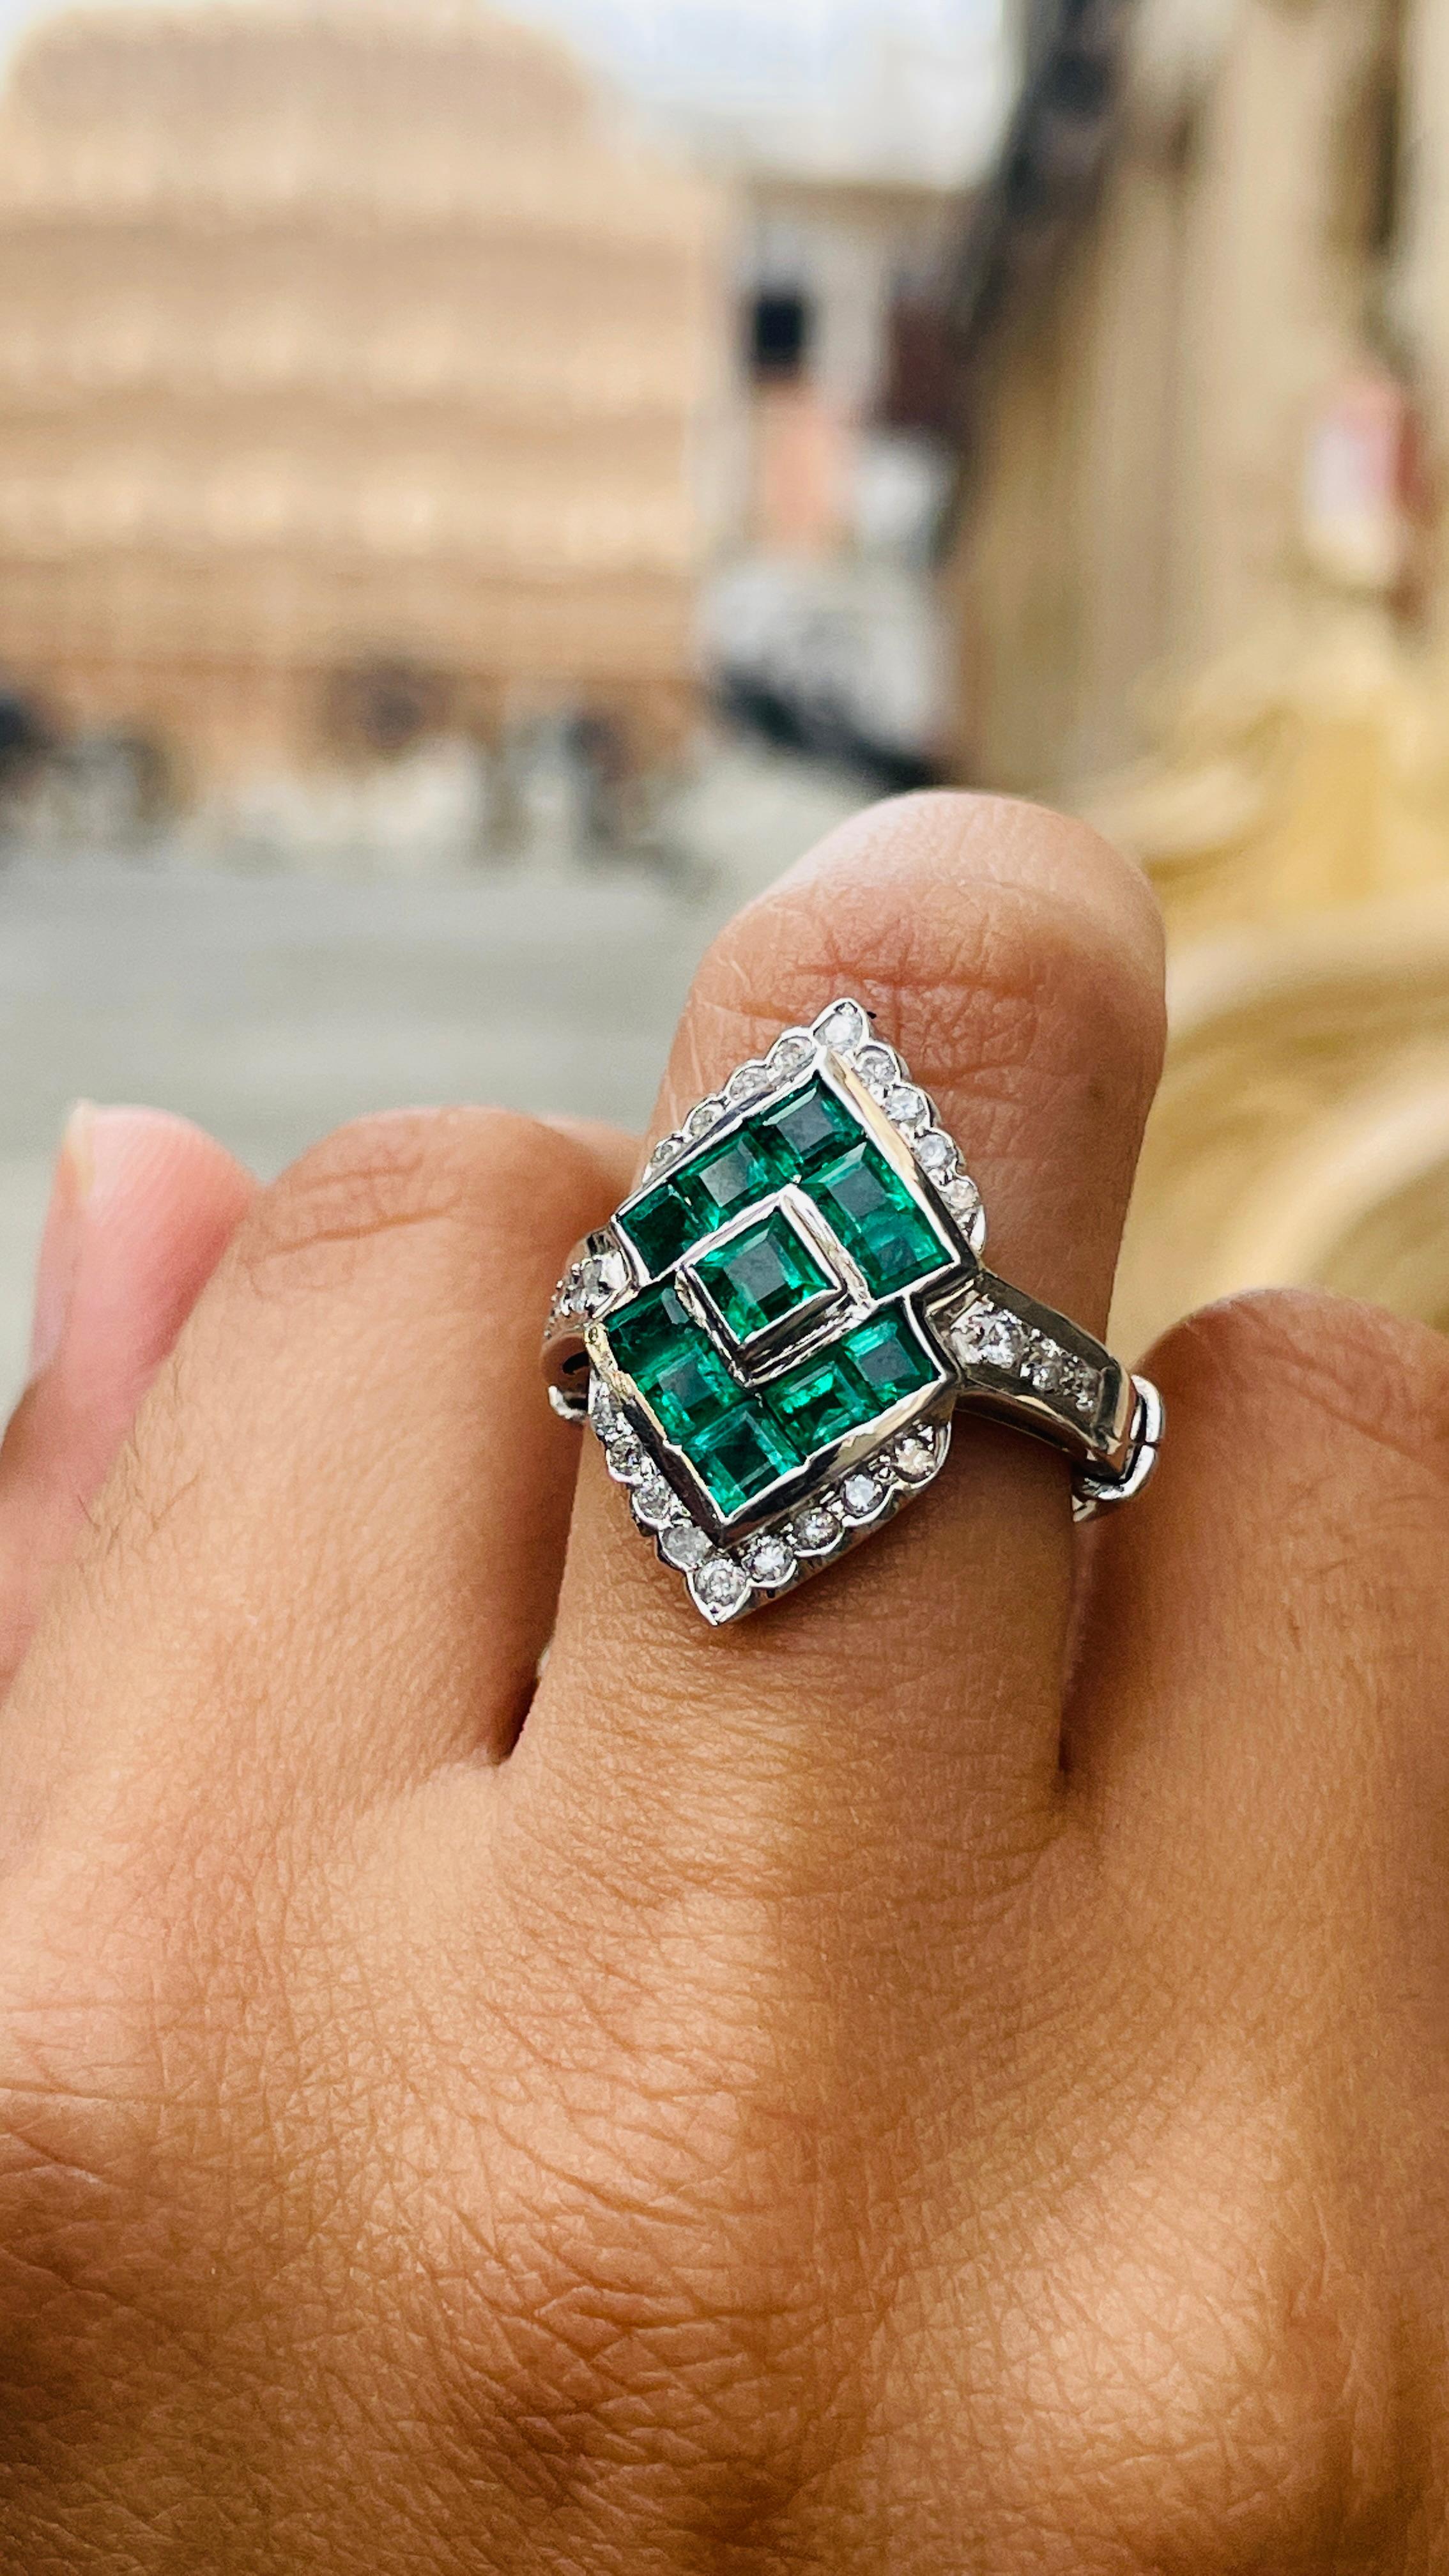 For Sale:  18k Solid White Gold Emerald Diamond Ring, Fine Emerald Ring 2